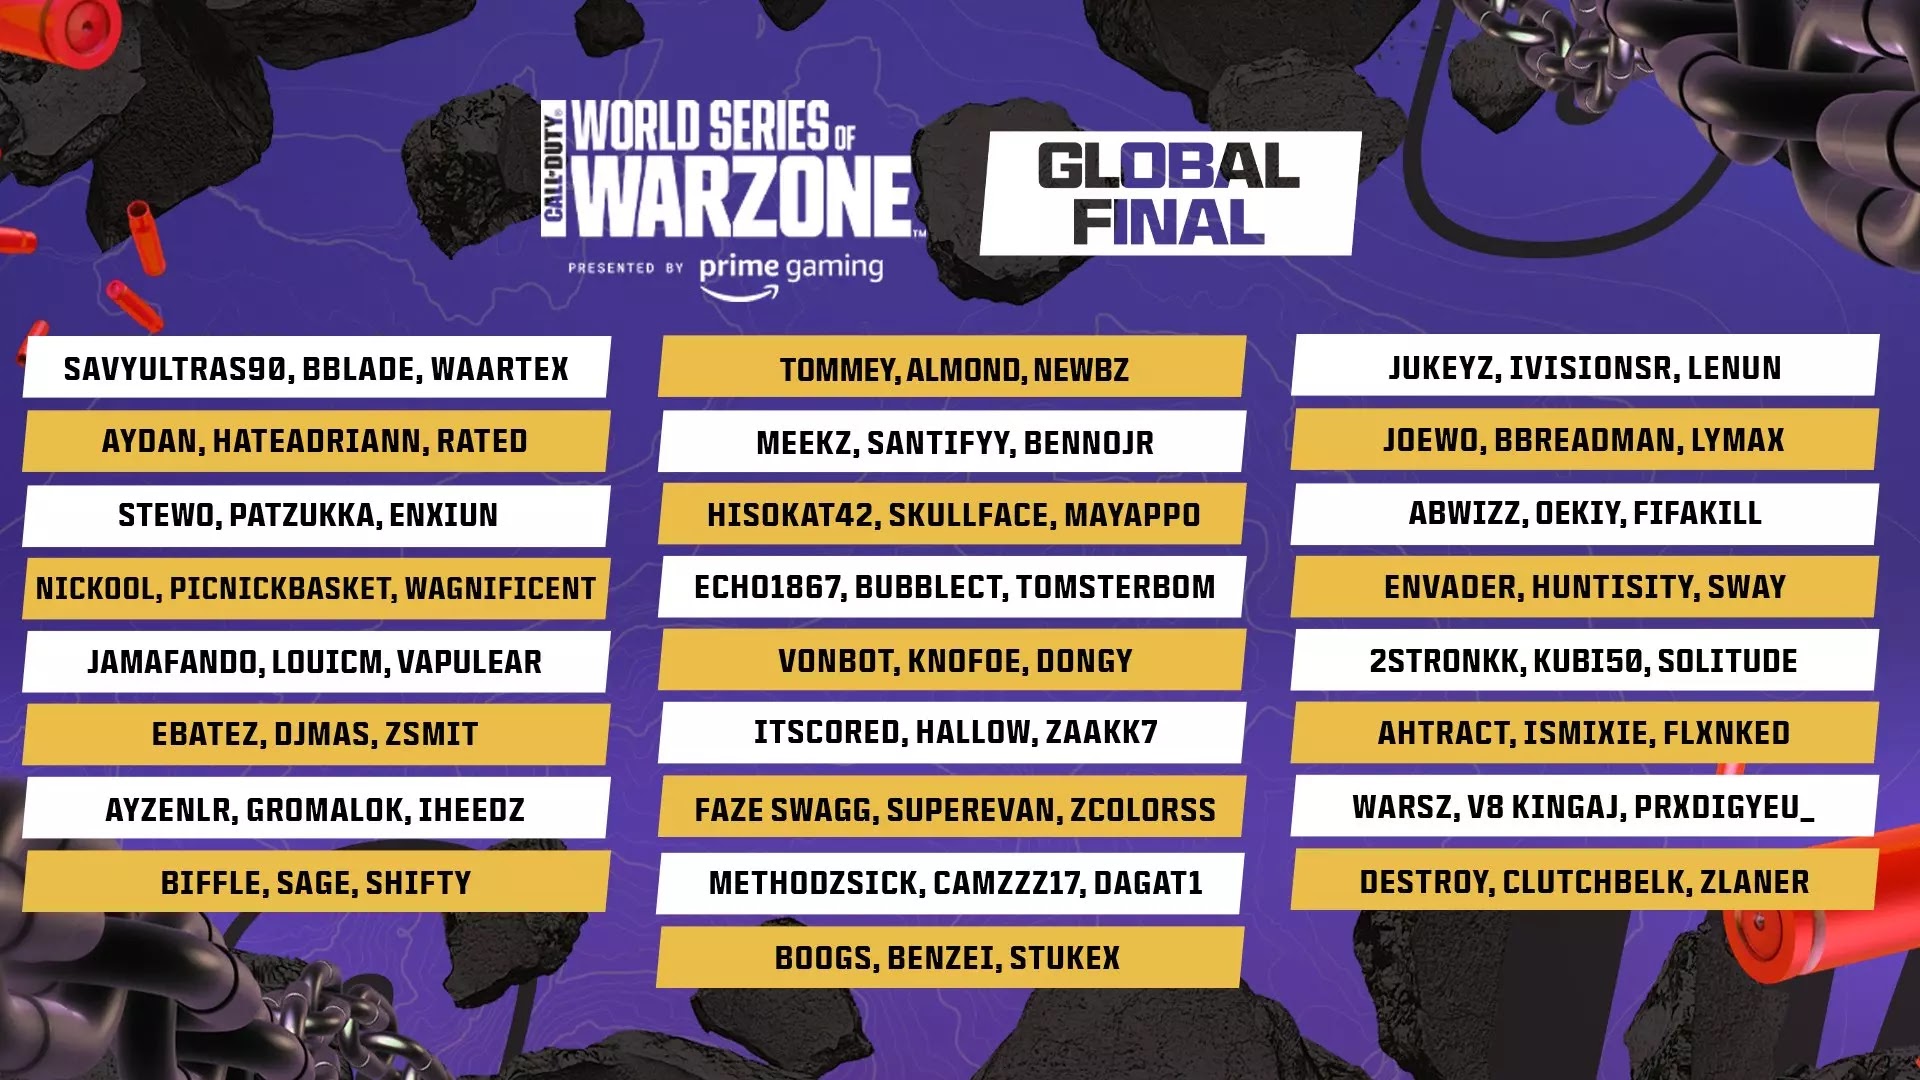 finalistas do mundial de warzone